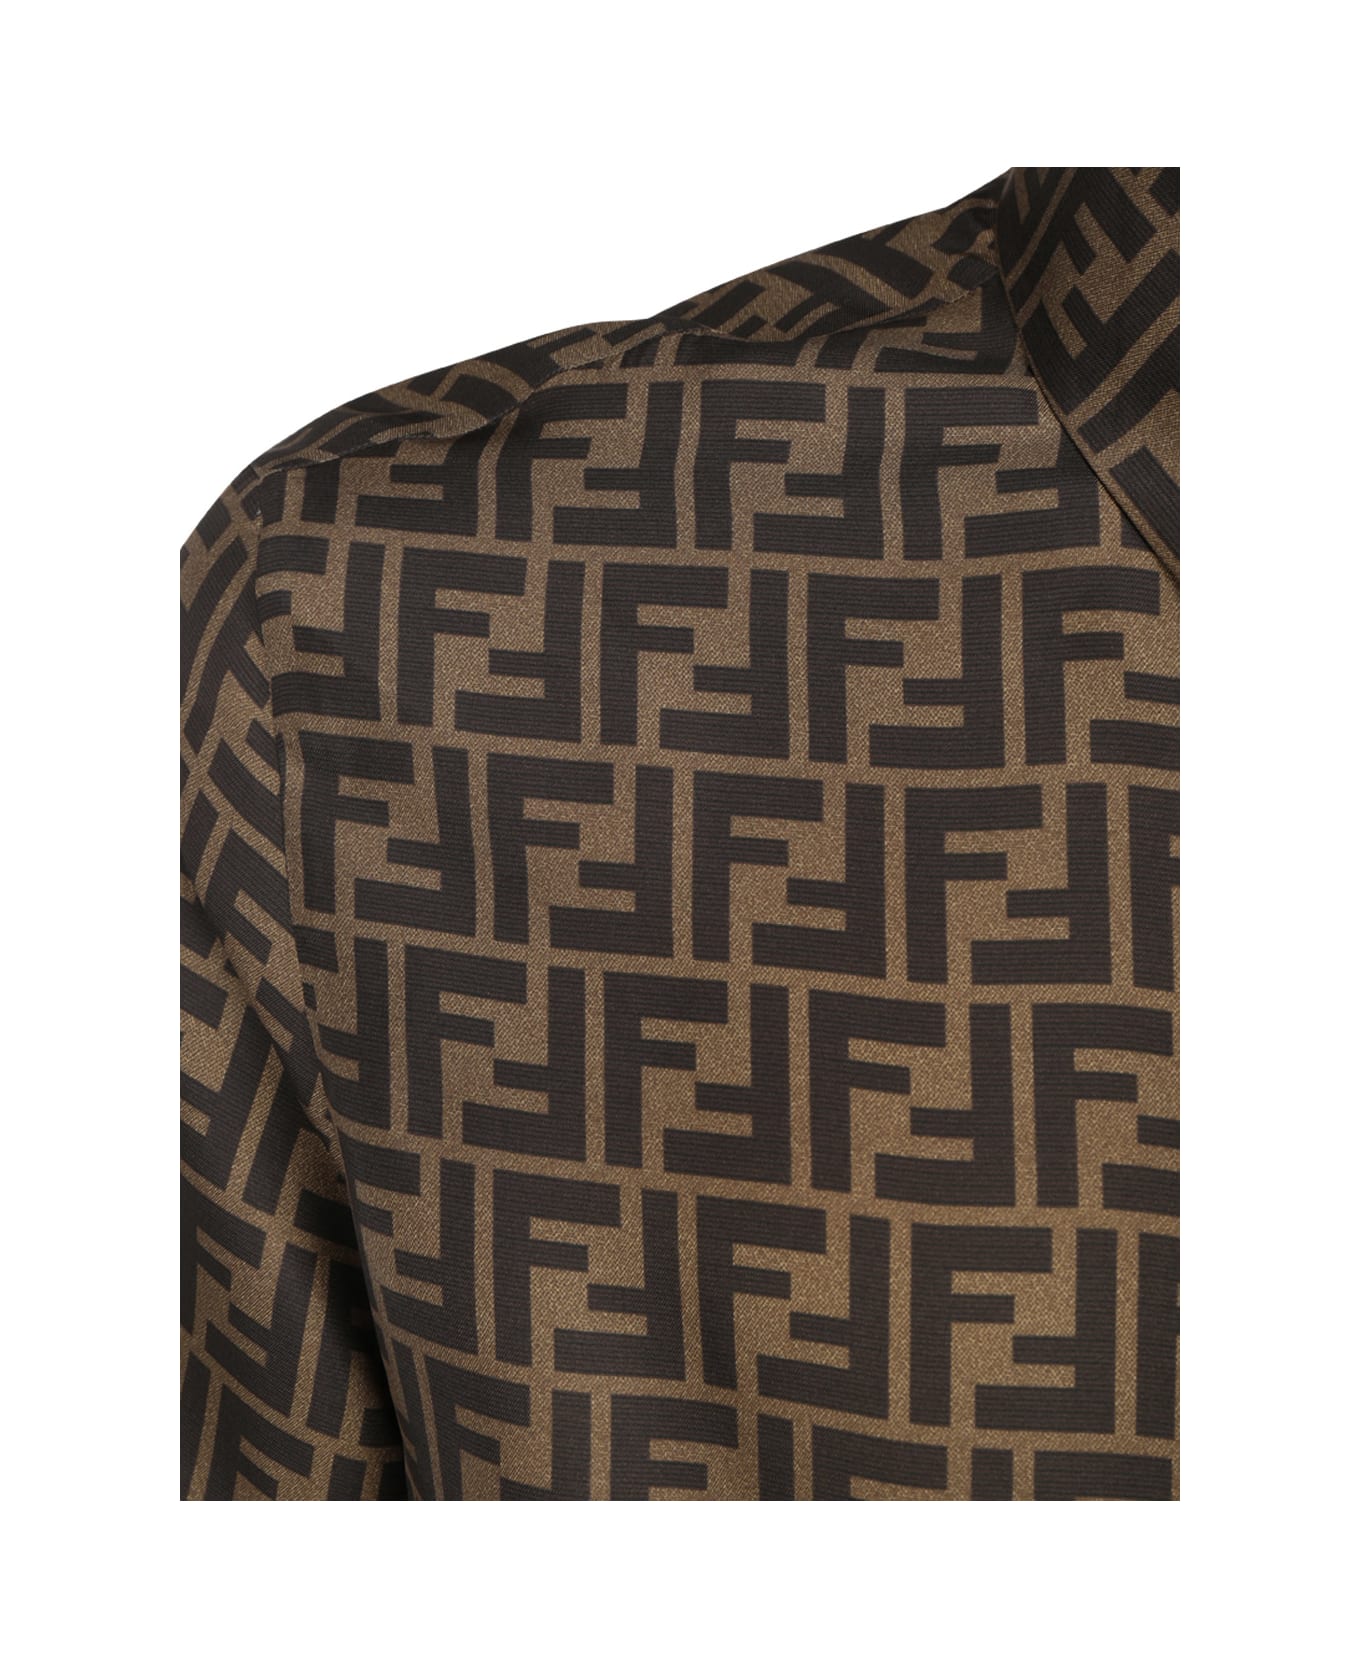 Fendi Ff Motif Short Sleeved Shirt - Fango/tabacco シャツ